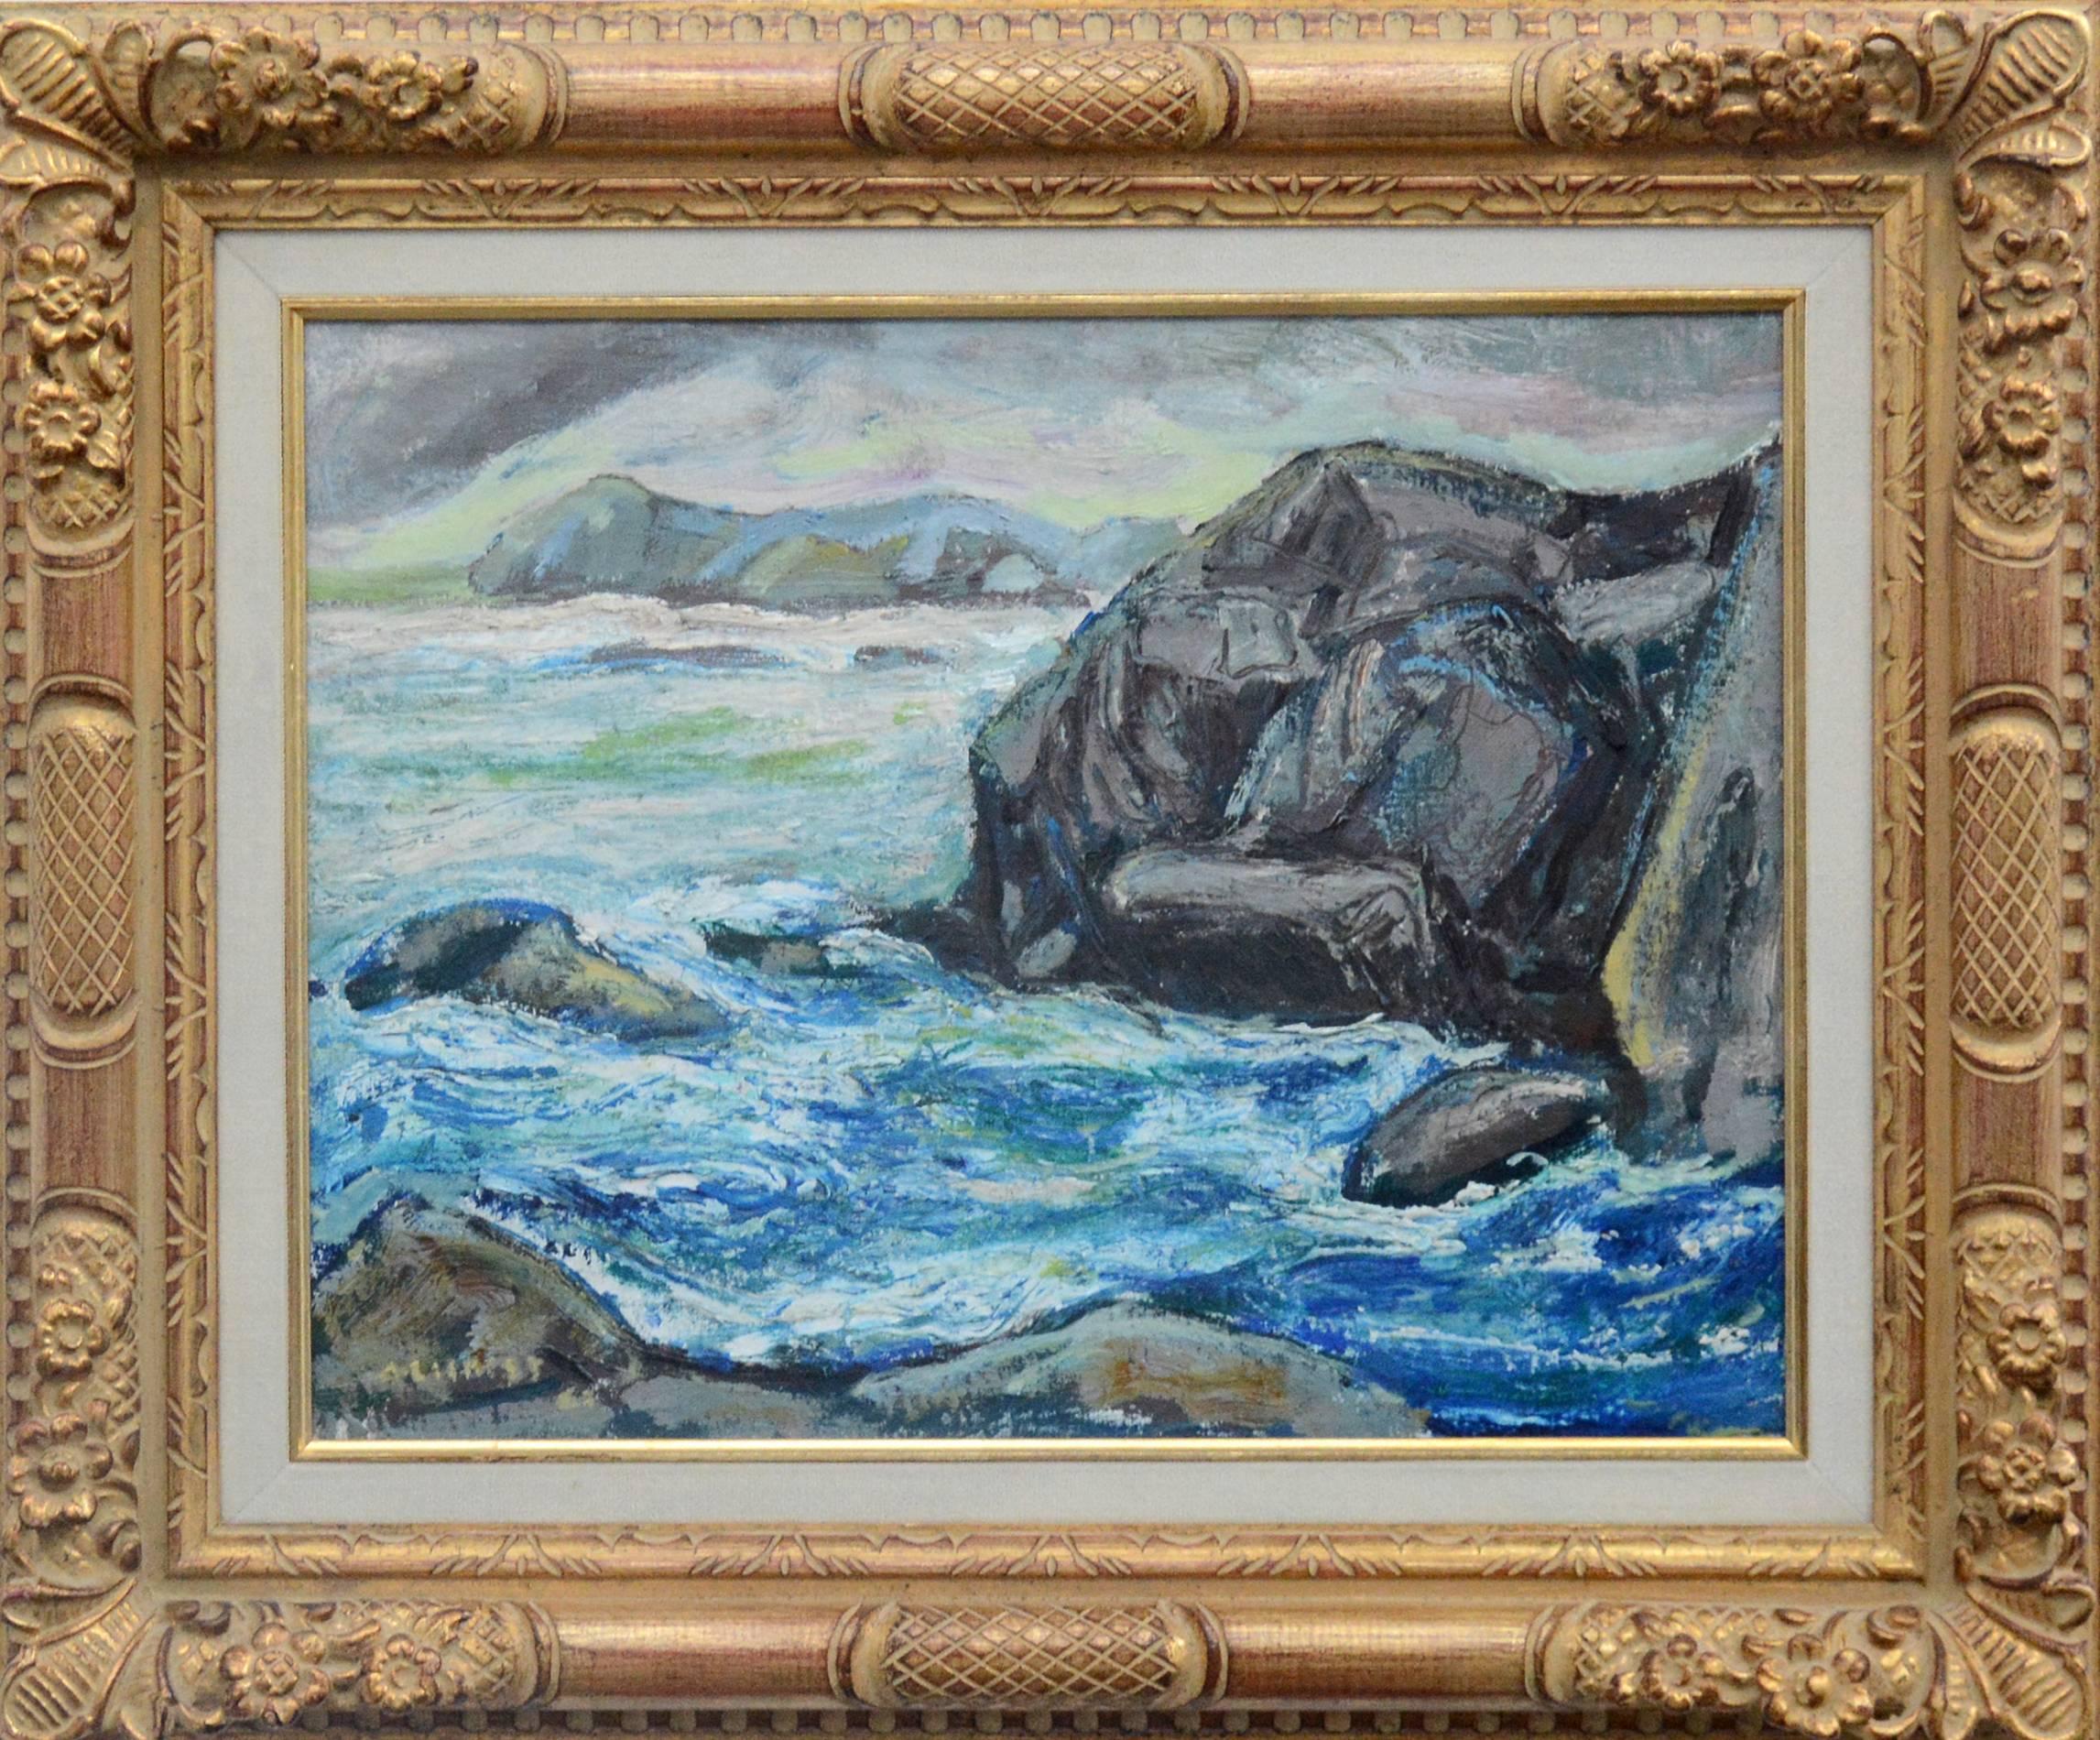 Georgian Bay - Painting by Arthur Lismer